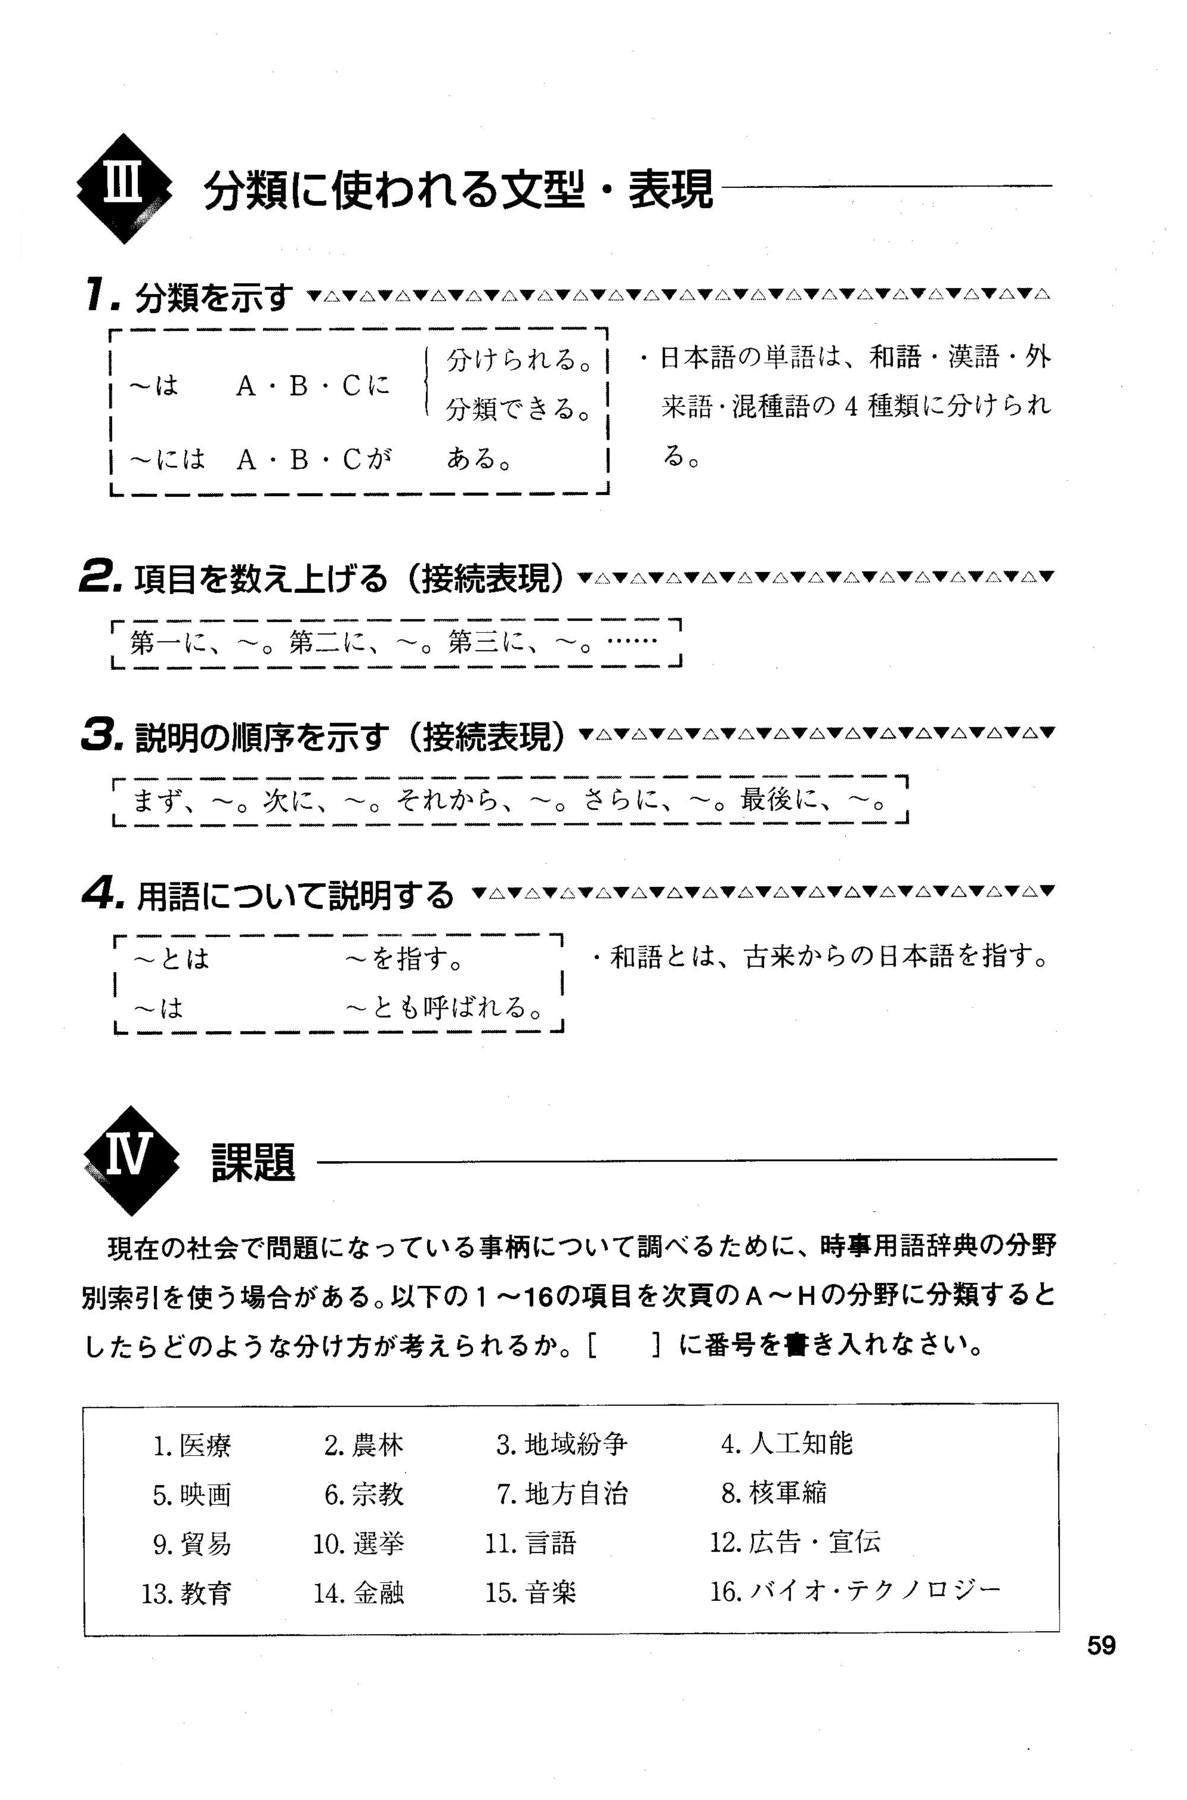 How to write japenese